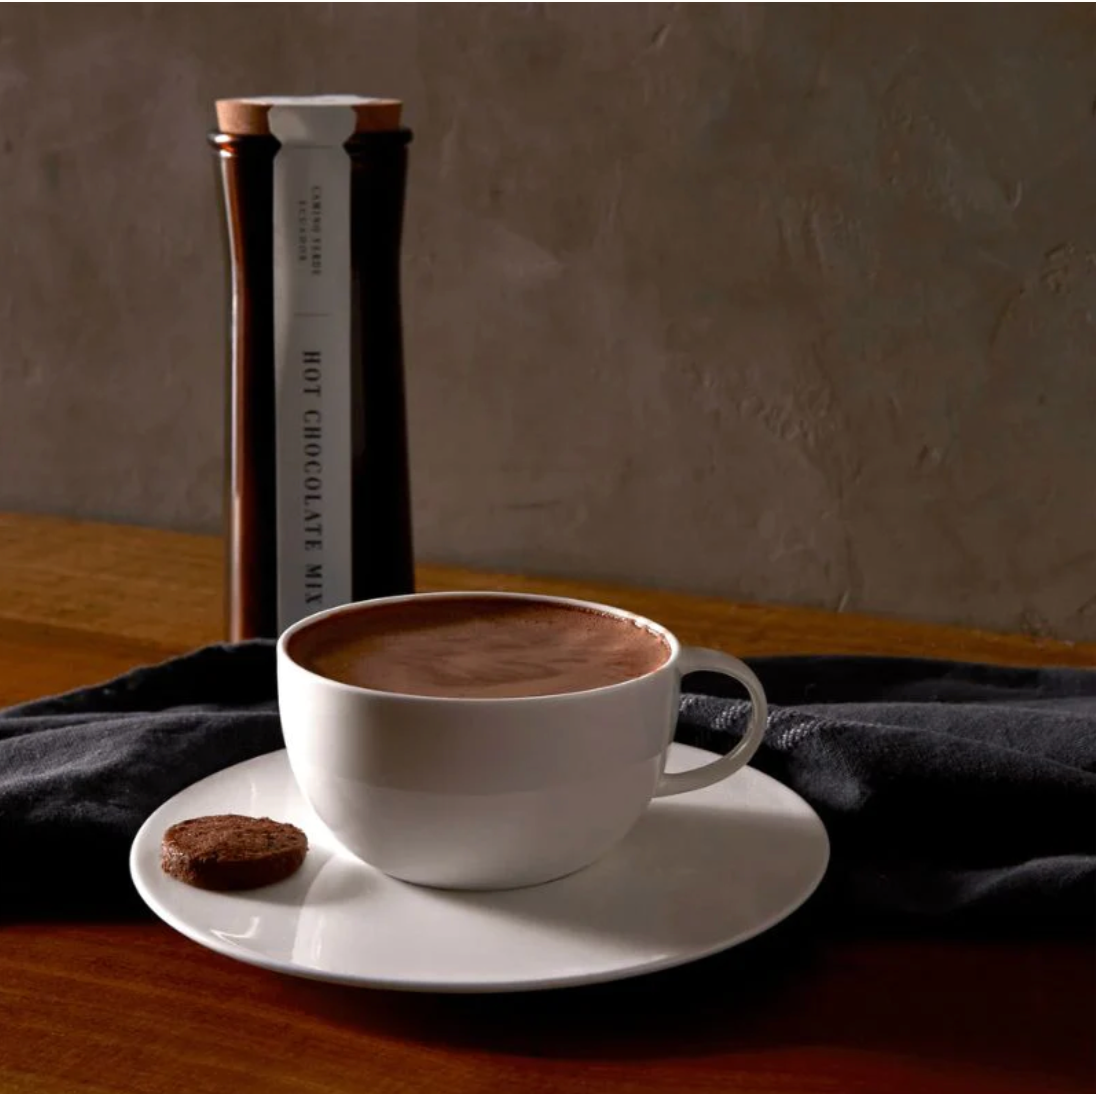 Dandelion Chocolate Hot Chocolate Mix, Camino Verde, Ecuador 70%